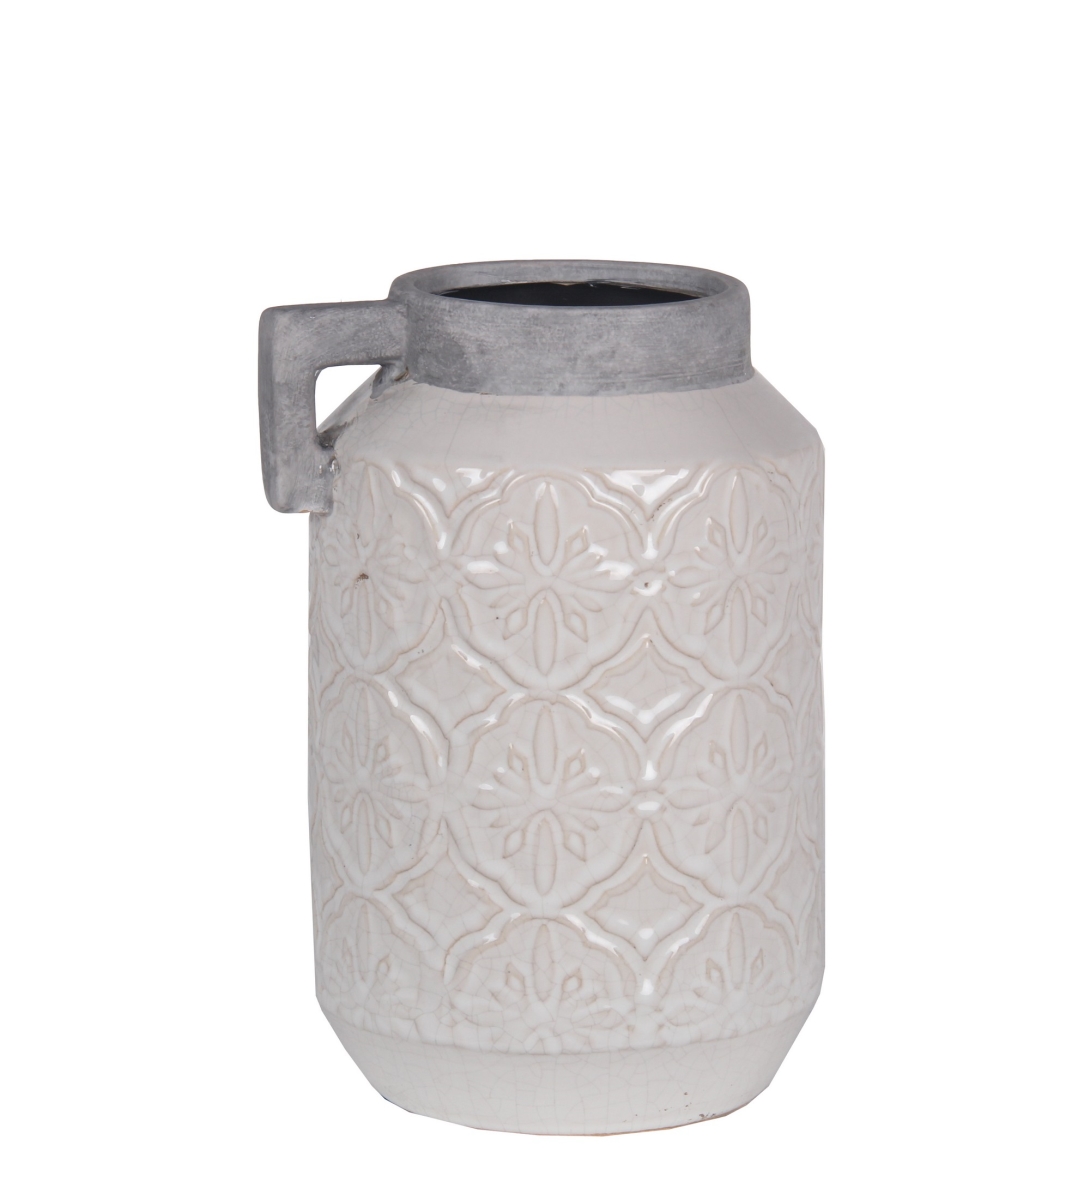 007-029 8 X 7 X 11.5 In. Geometric Decorative Ceramic Vase, White - Small